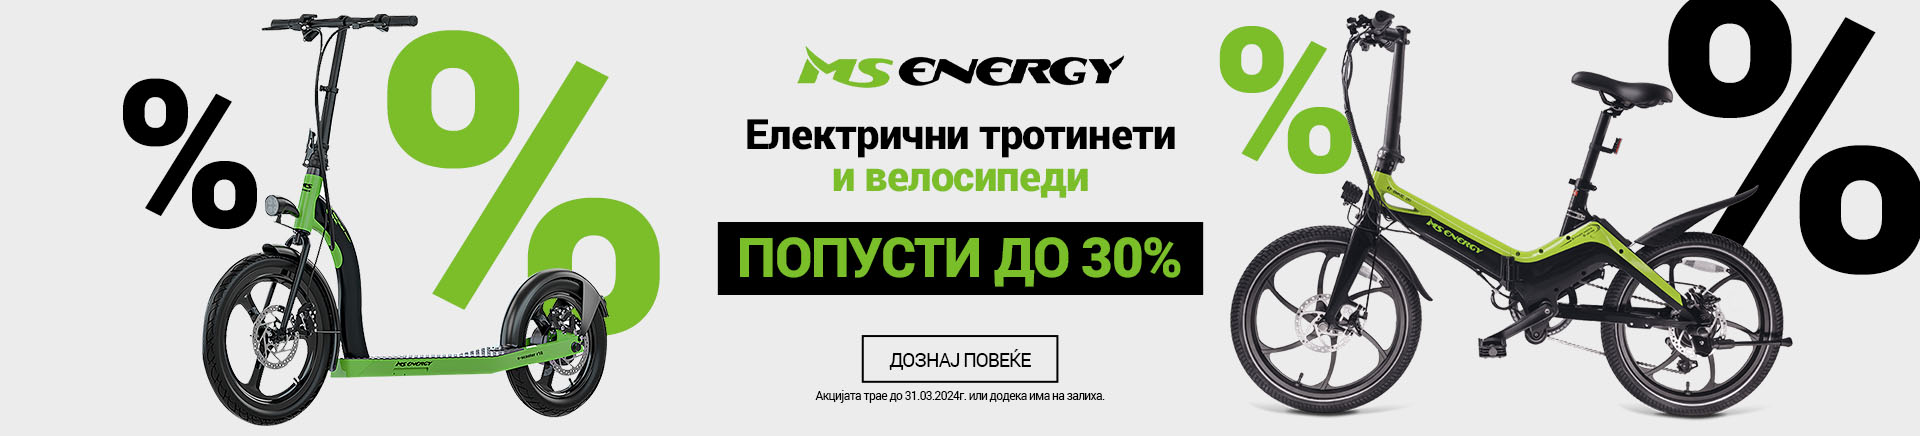 MK MS energy elektricni bicikli romobili 30posto MOBILE 380 X 436.jpg